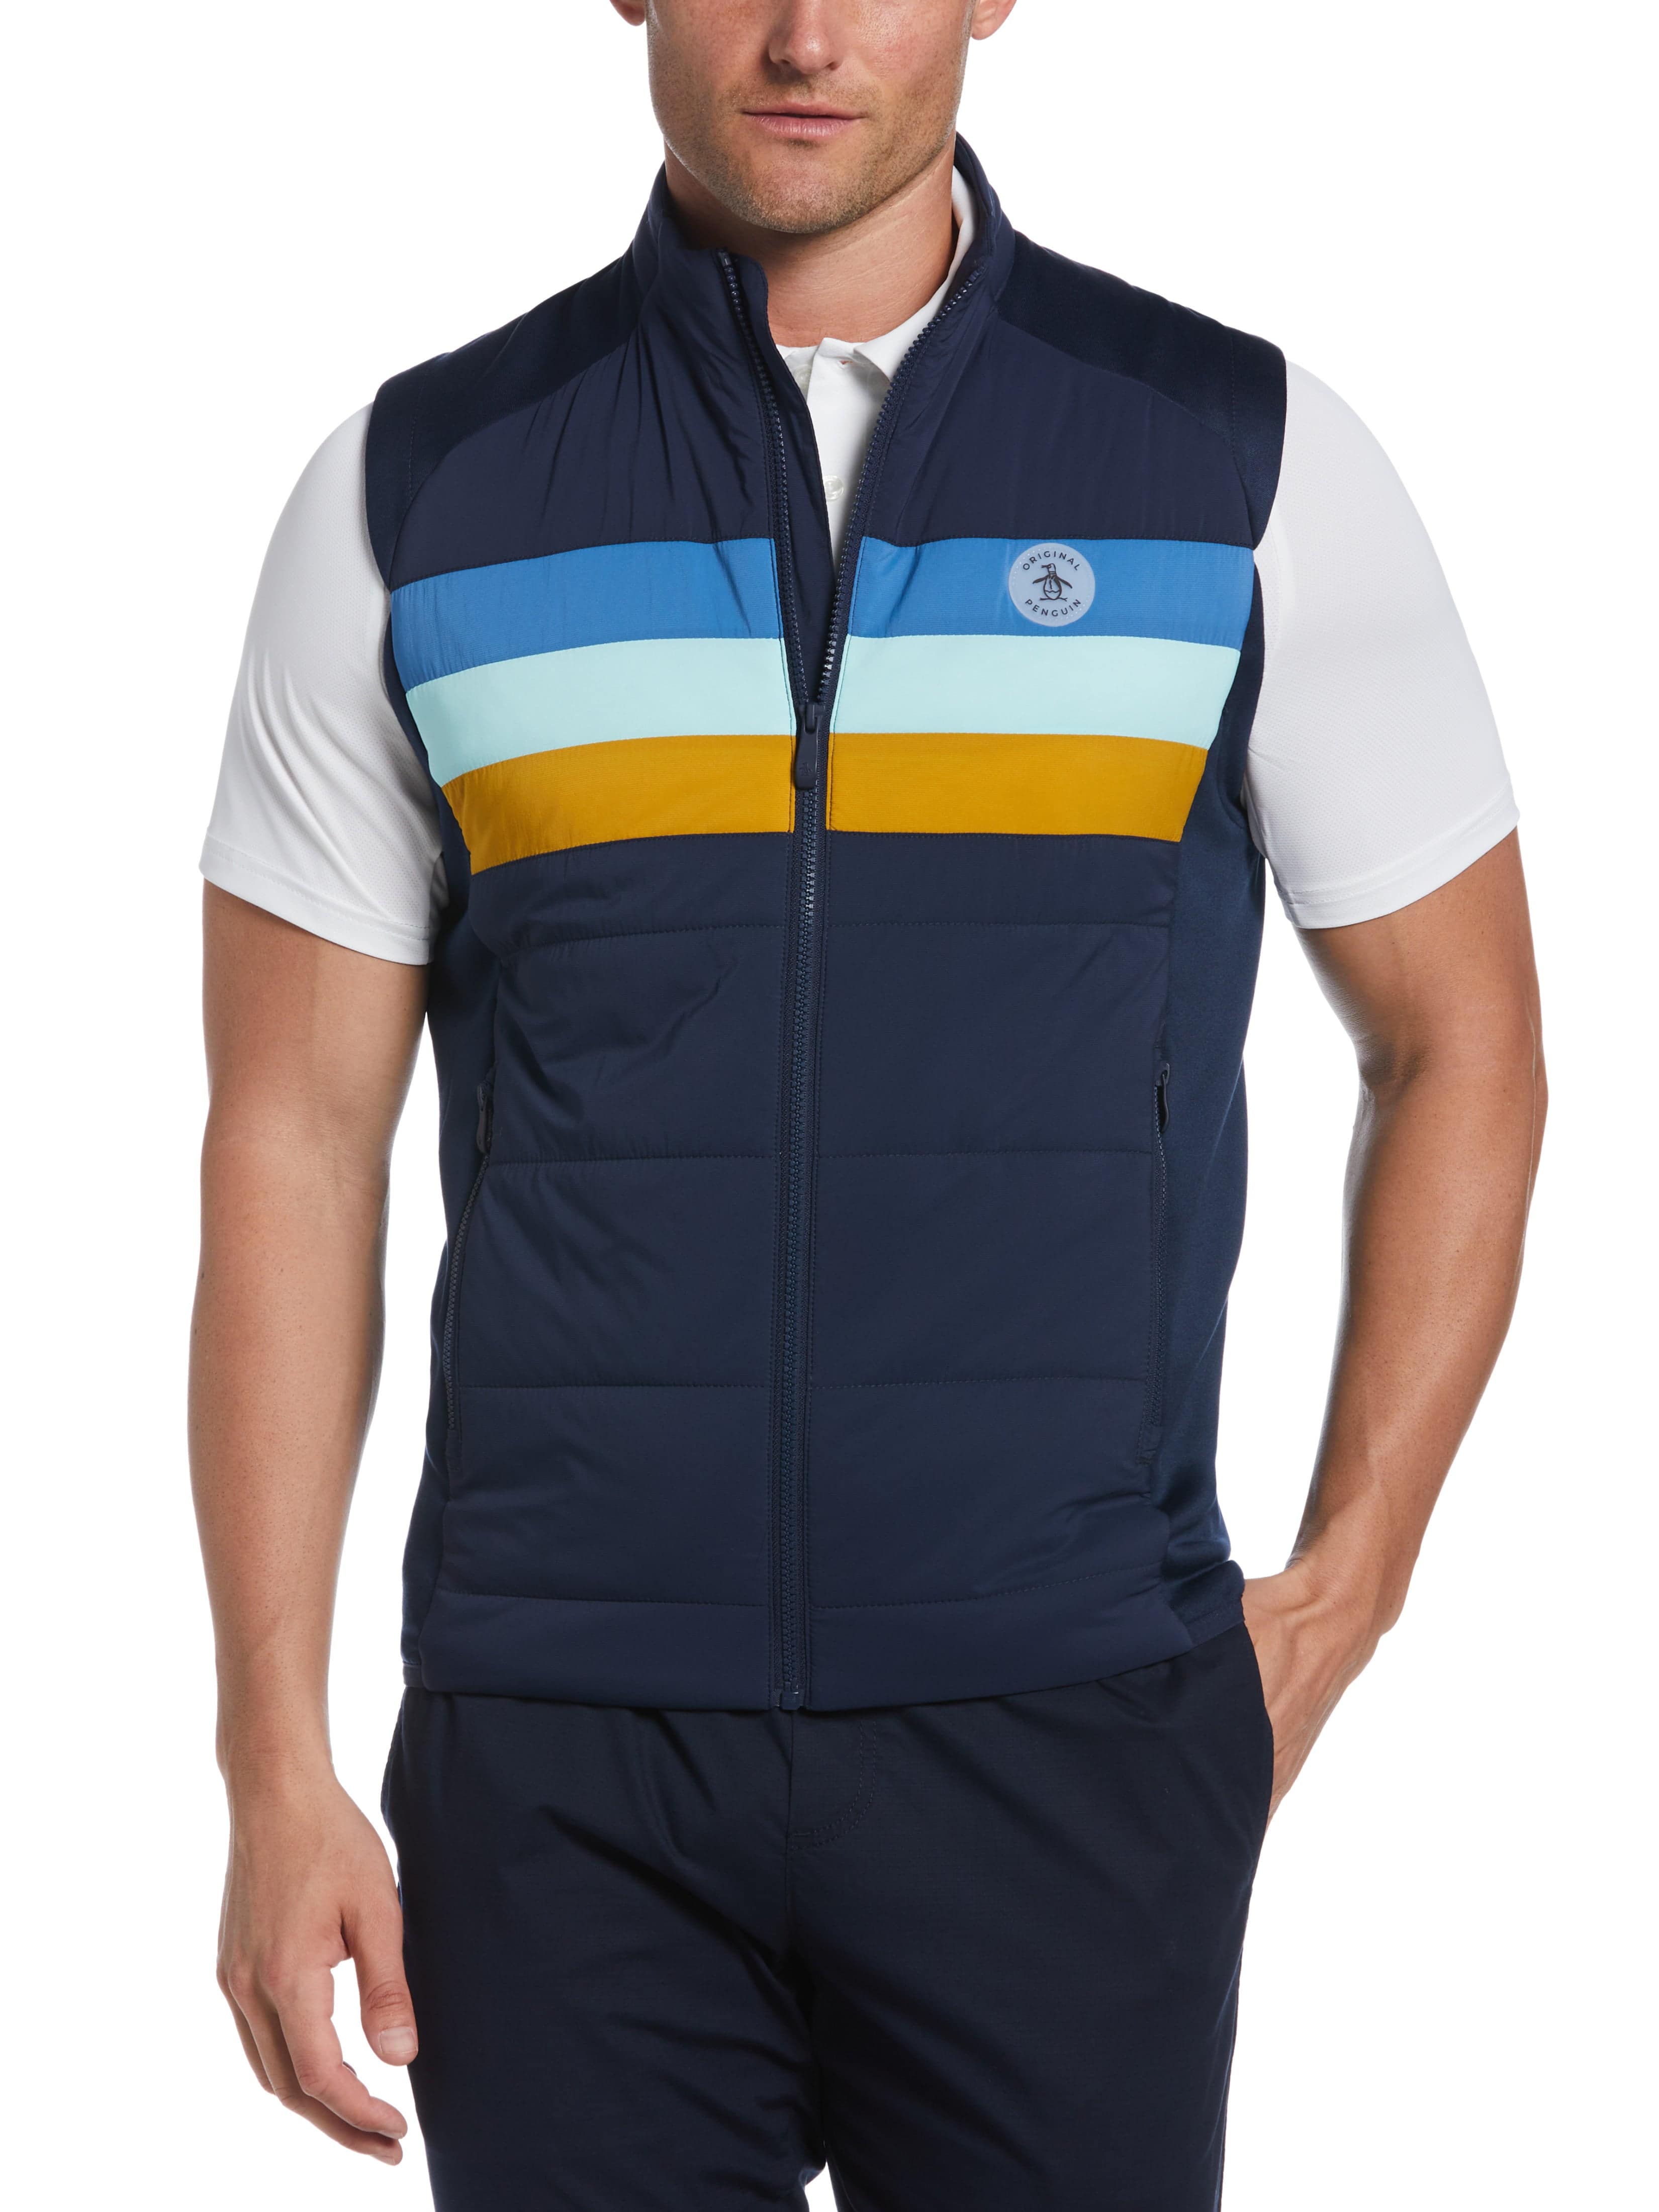 Original Penguin Mens Insulated 70s Golf Vest Top, Size XL, Dark Navy Blue, 100% Nylon | Golf Apparel Shop